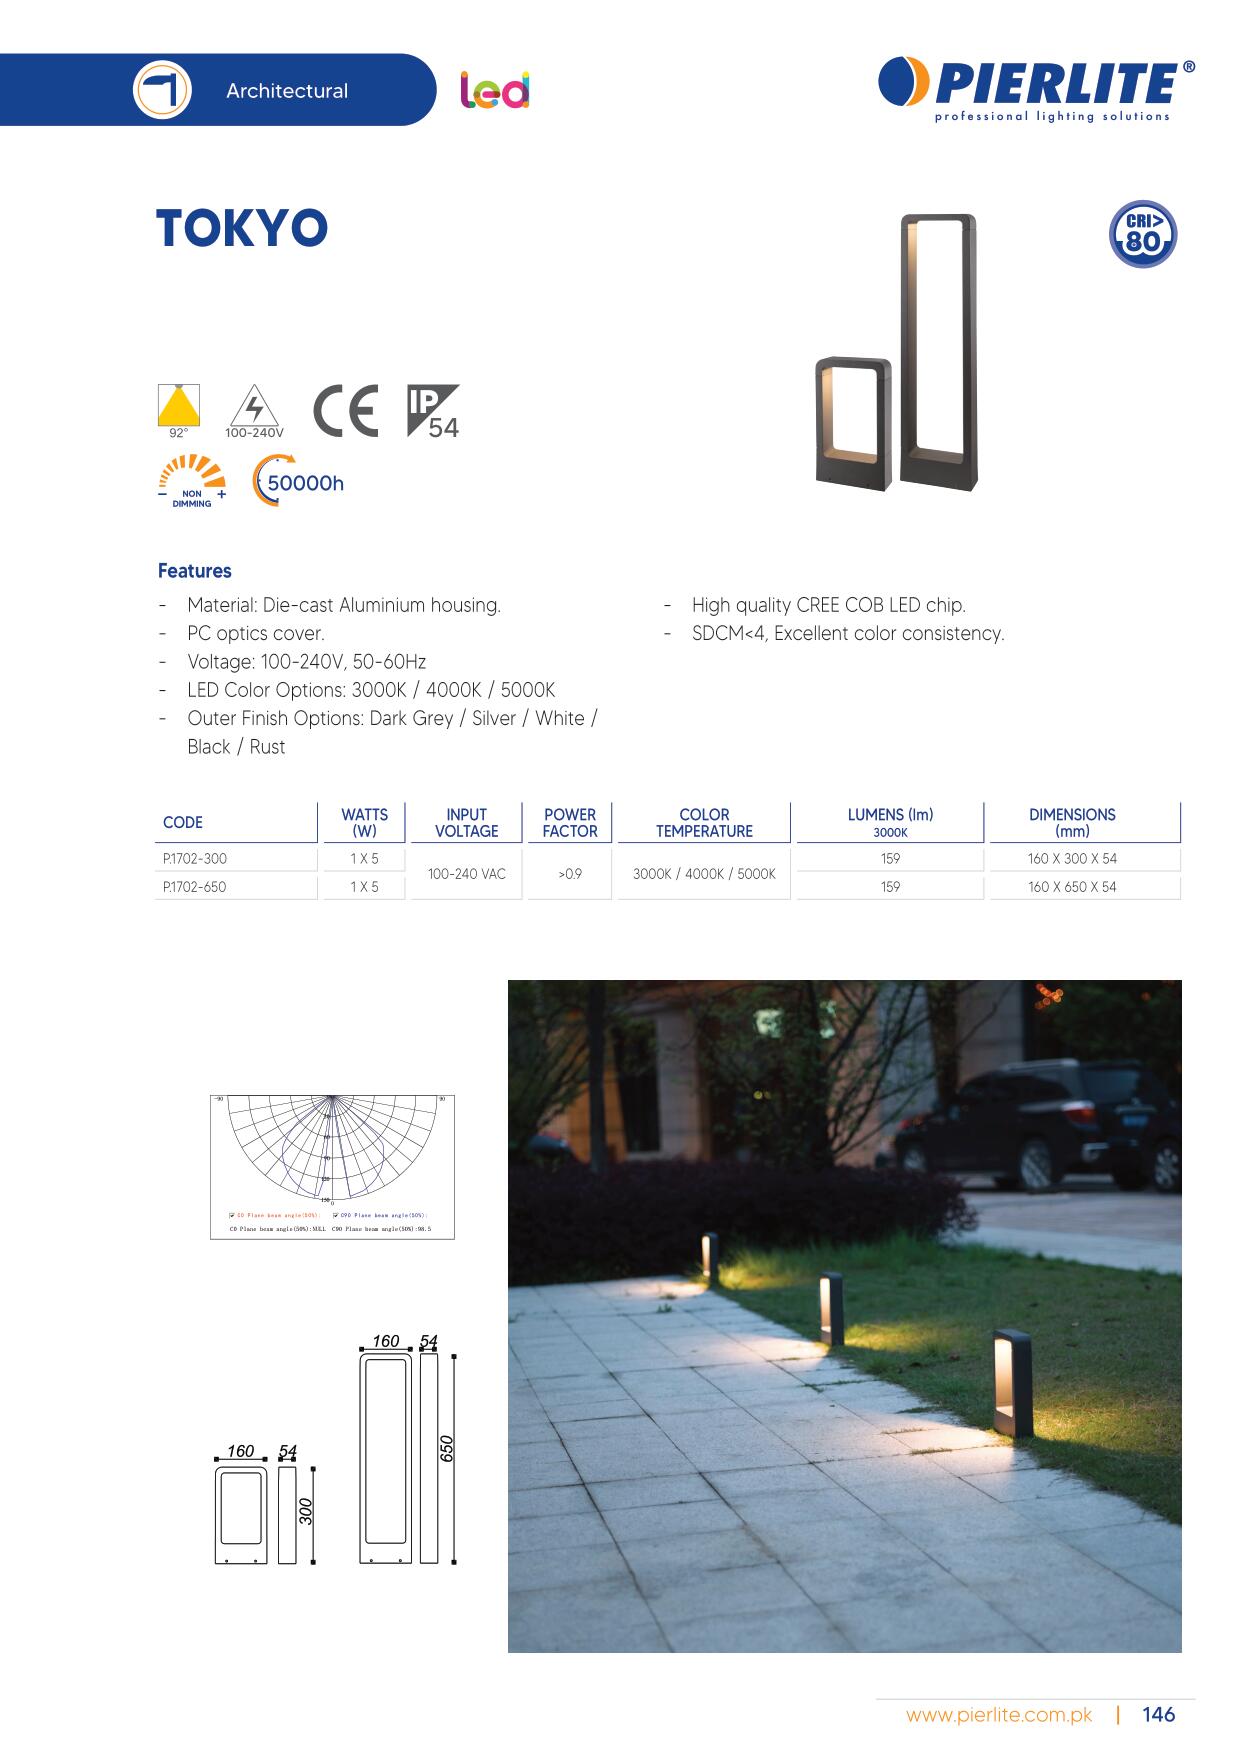 Pierlite LED Luminaire Catalog 2021-155